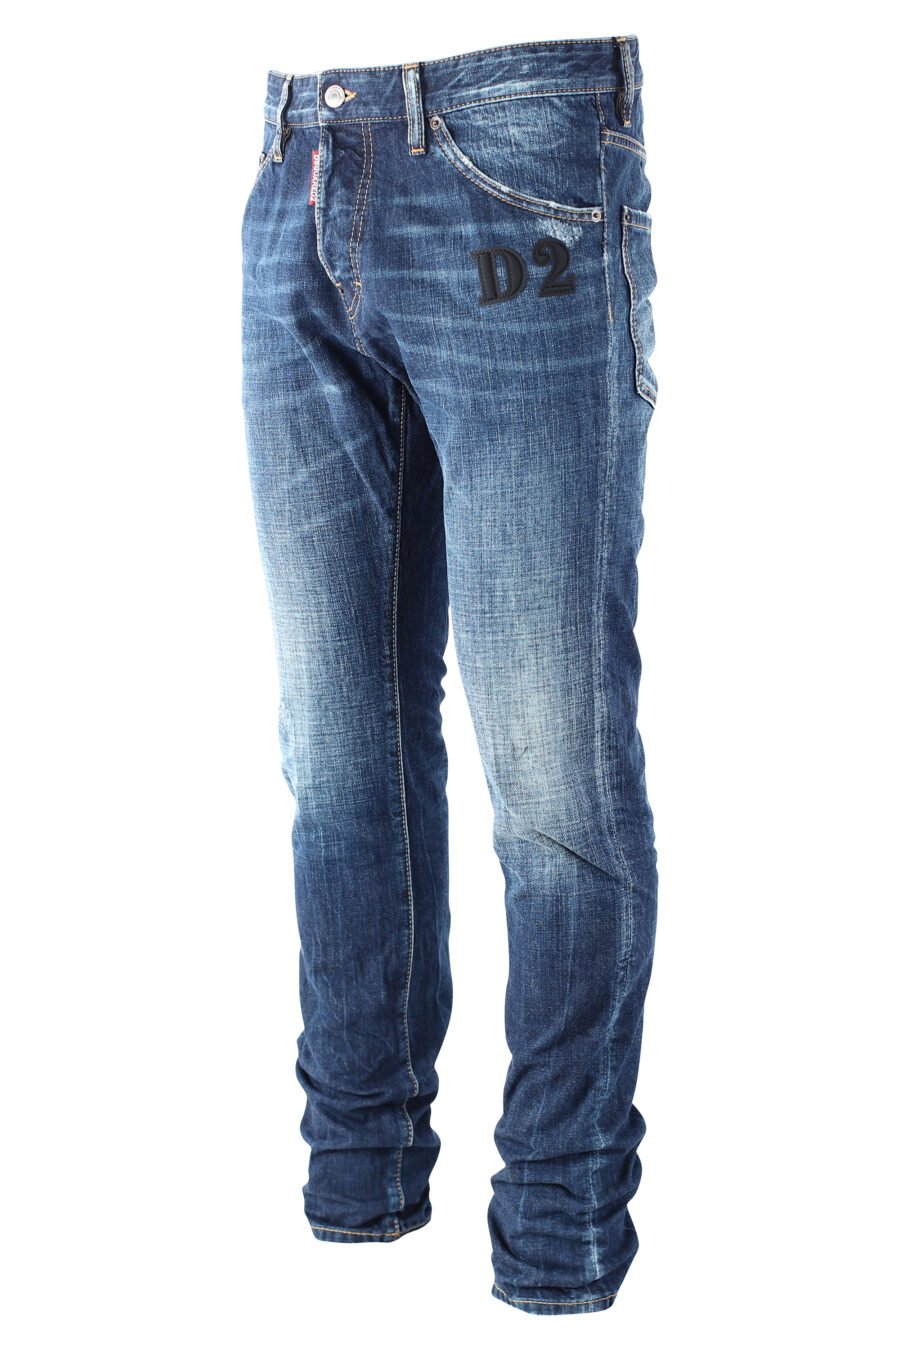 Jeans "cool guy jean" bleu avec logo "D2" noir - IMG 9688